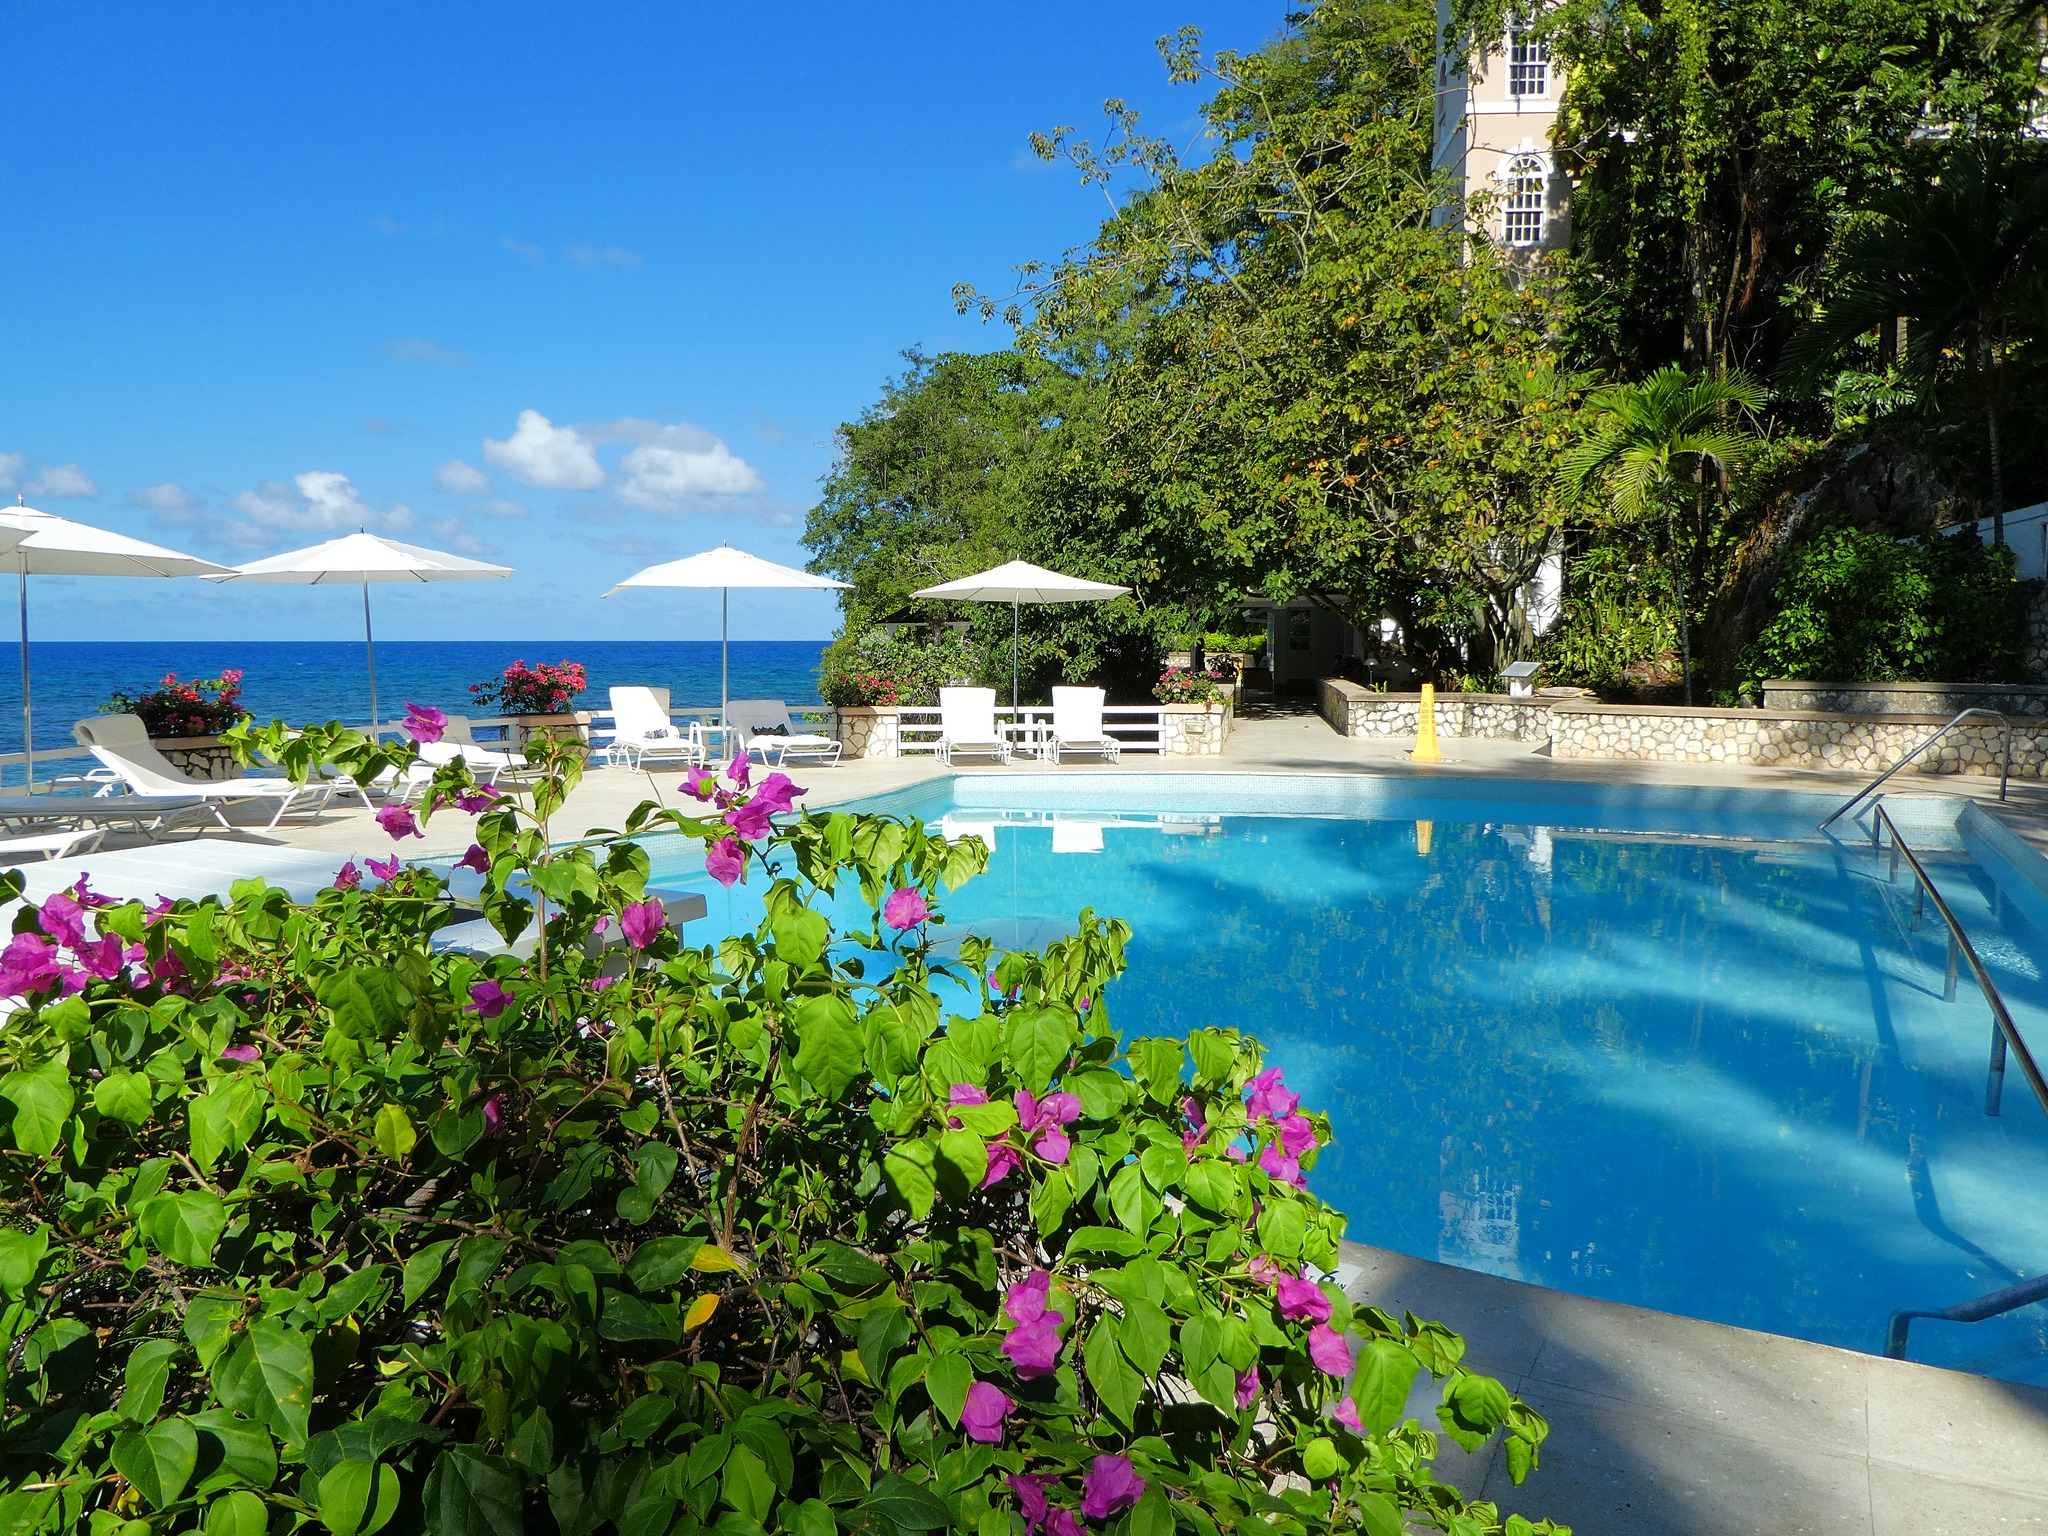 Popular Clothing Optional Resorts in Jamaica